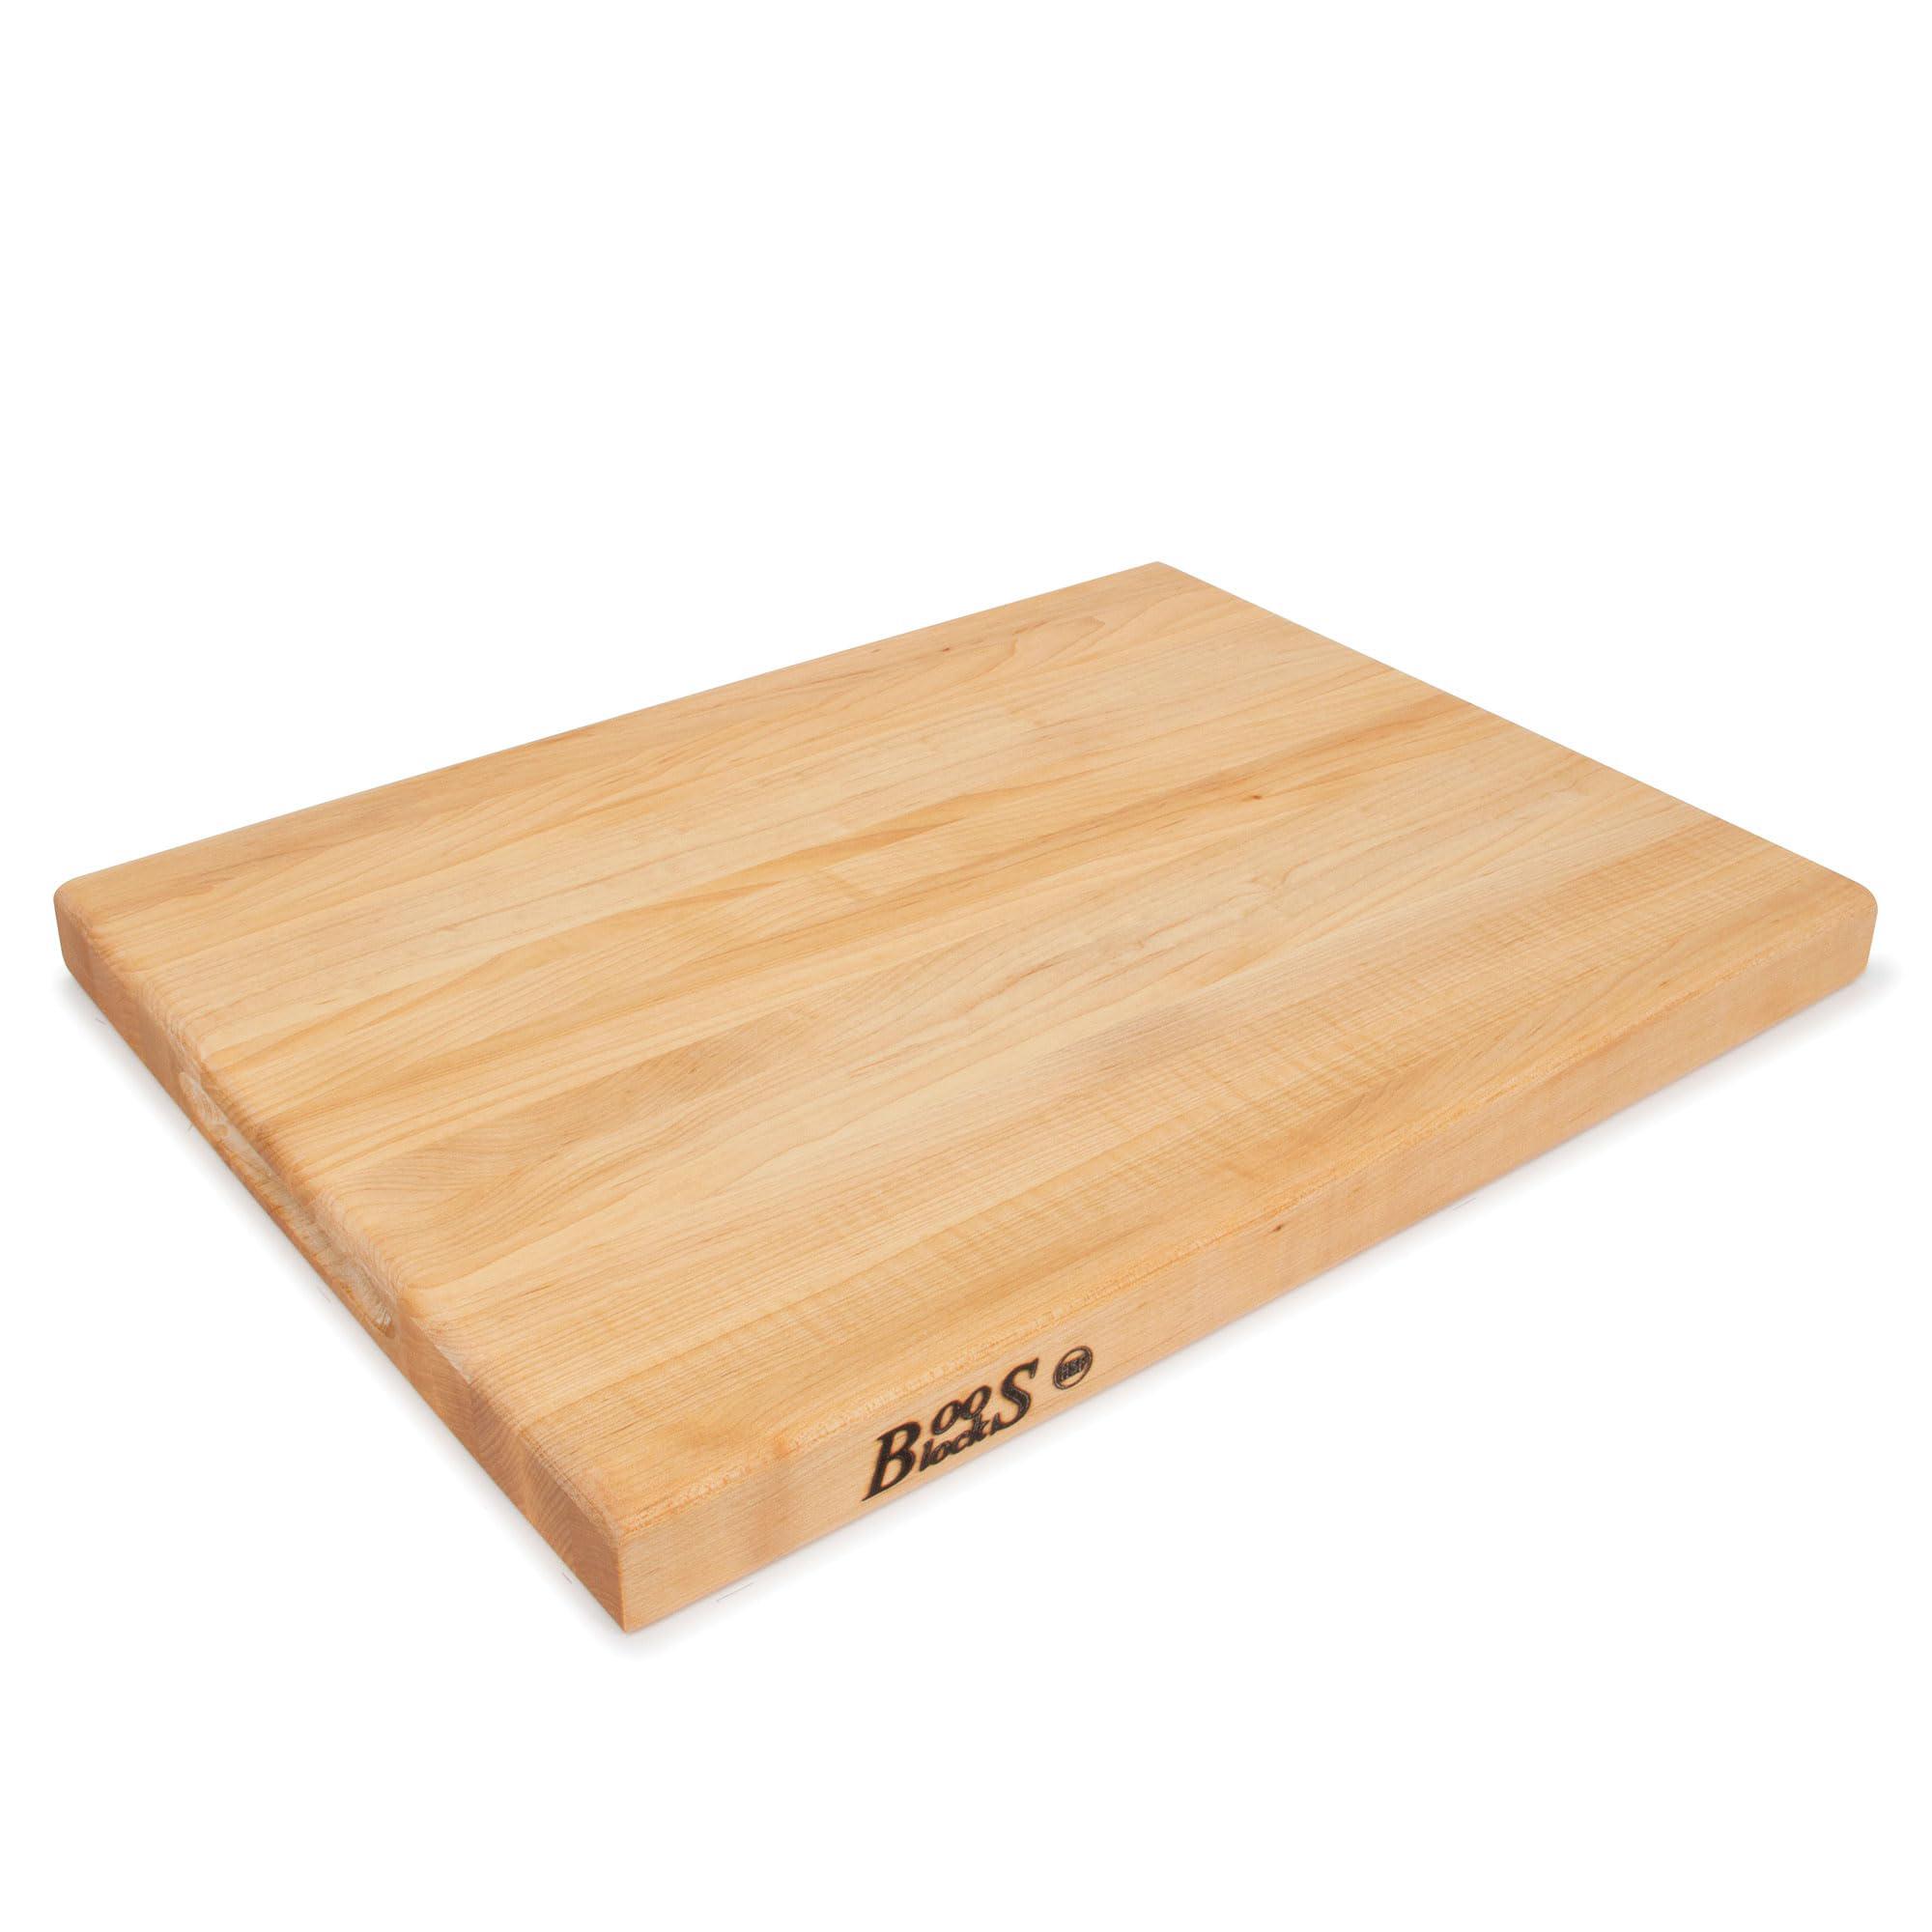 john boos maple wood cutting board for kitchen prep, 1.5 inch thick, large edge grain rectangular reversible charcuterie boos